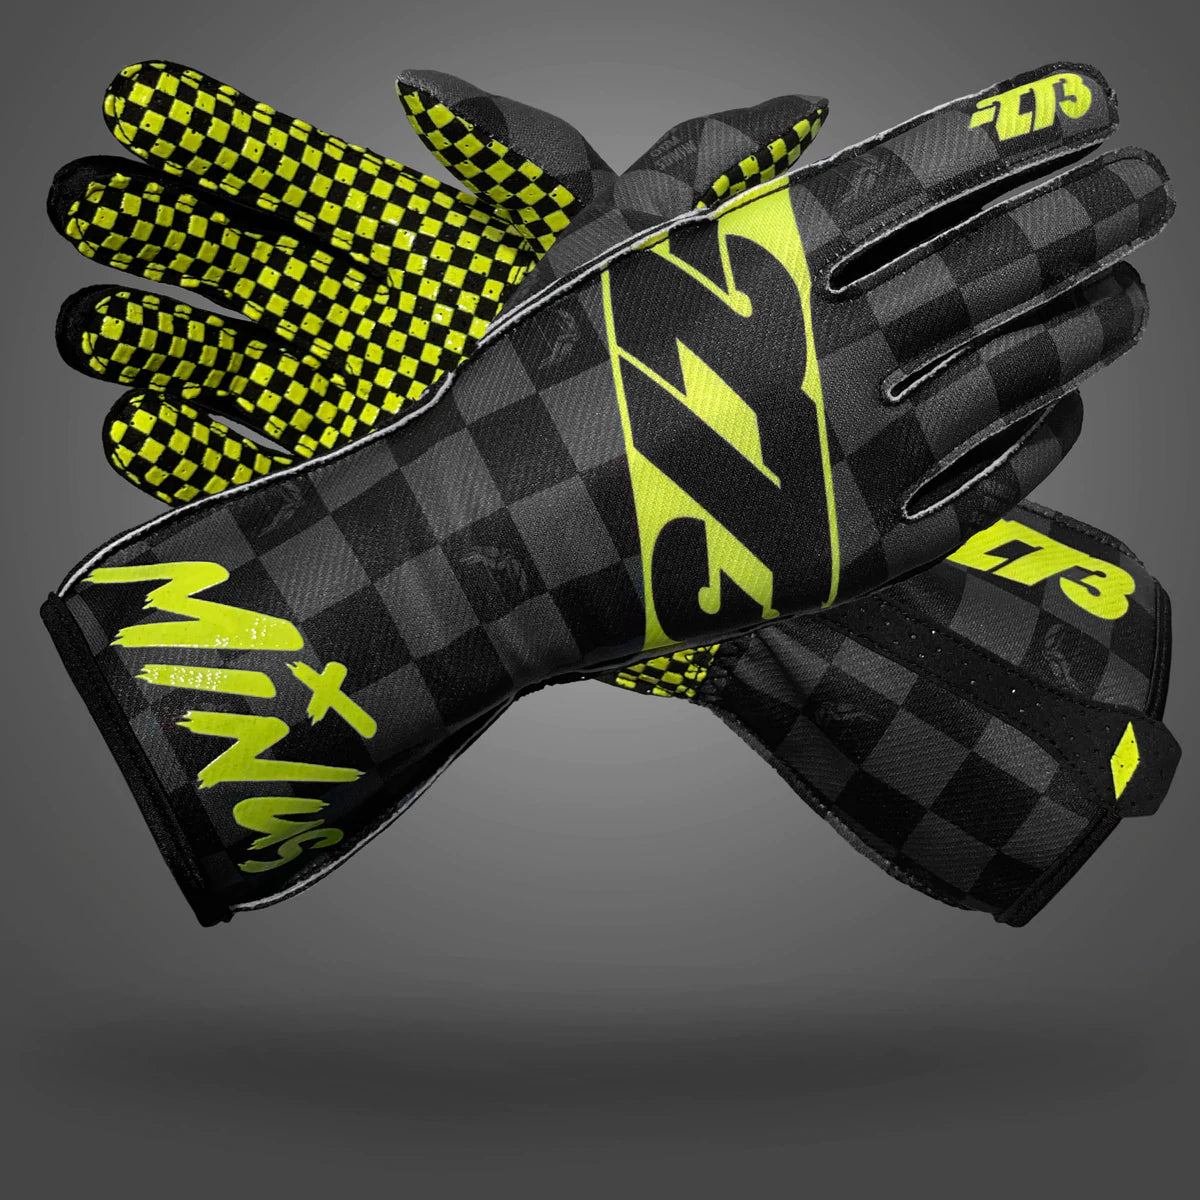 -273 Crenshaw Glove Yellow Black - Xtra Large